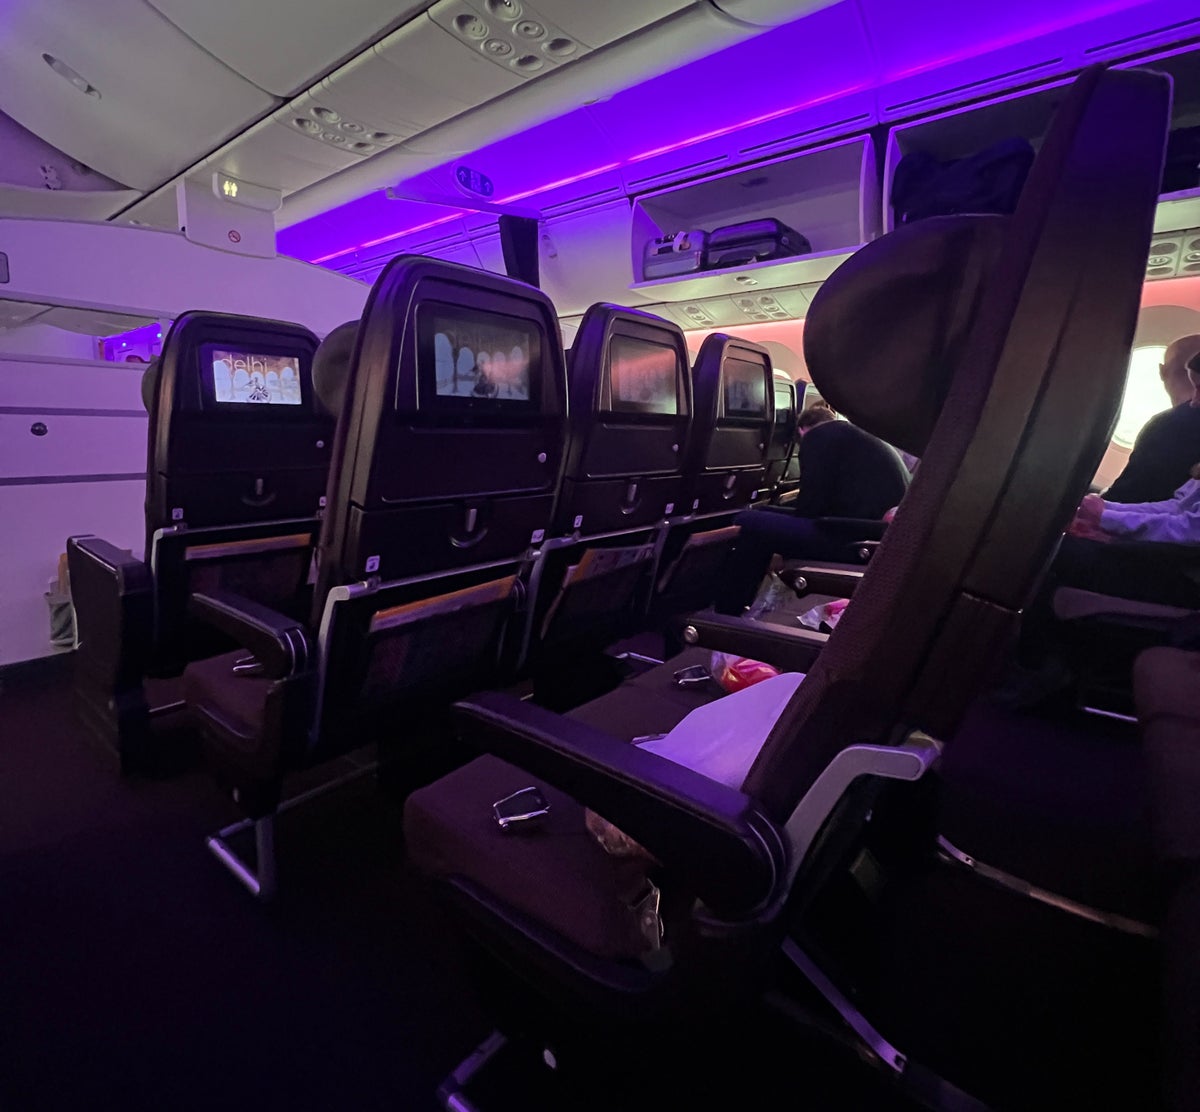 Virgin Atlantic Economy Seating